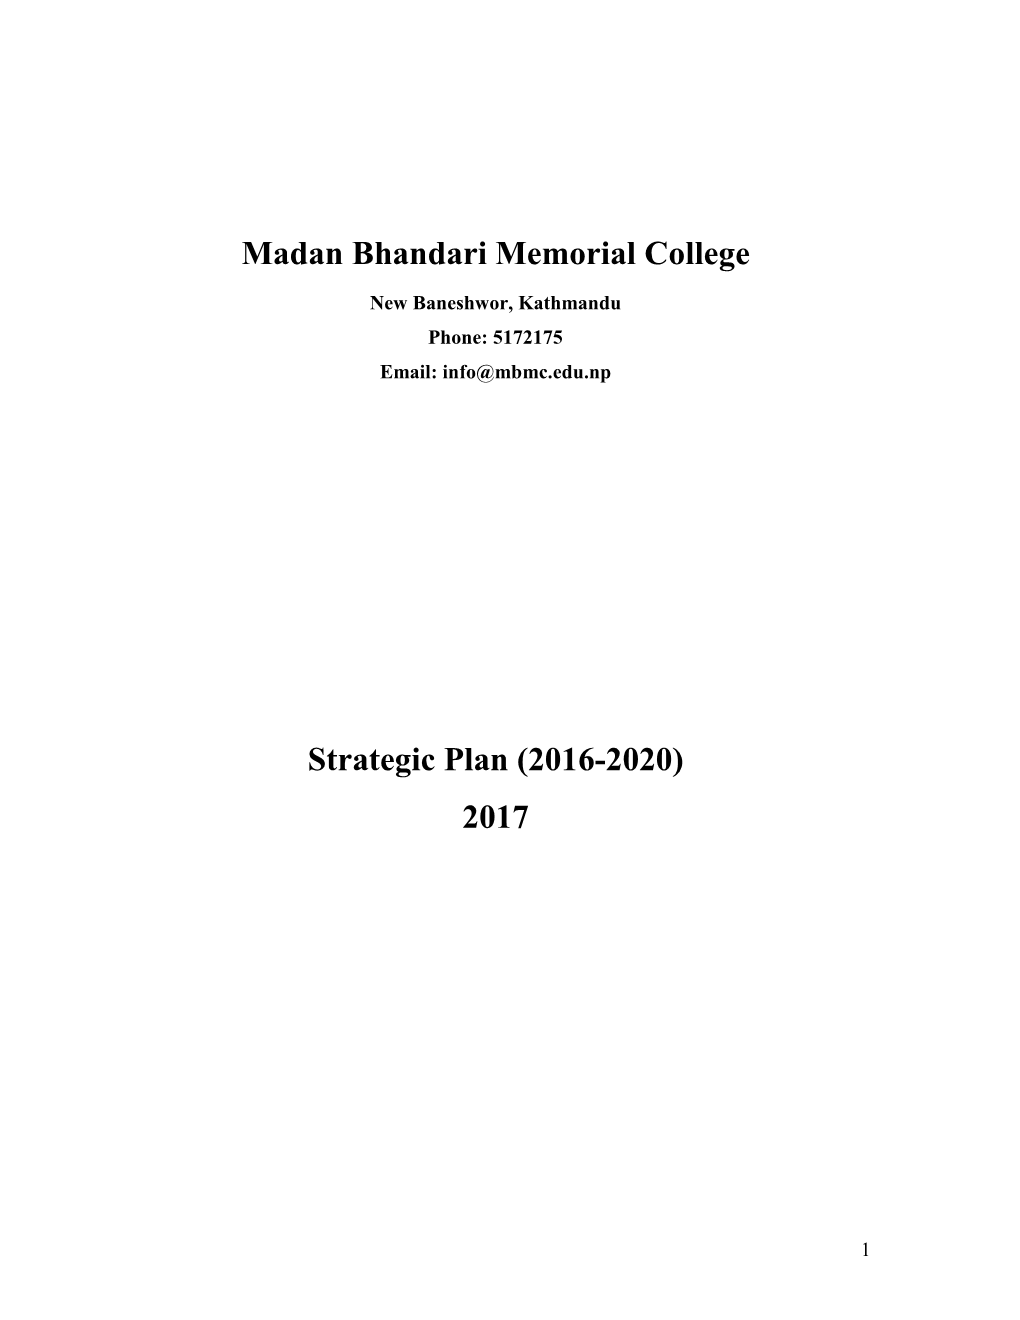 Strategic Development Plan of Madan Bhandari Memorial College 2016